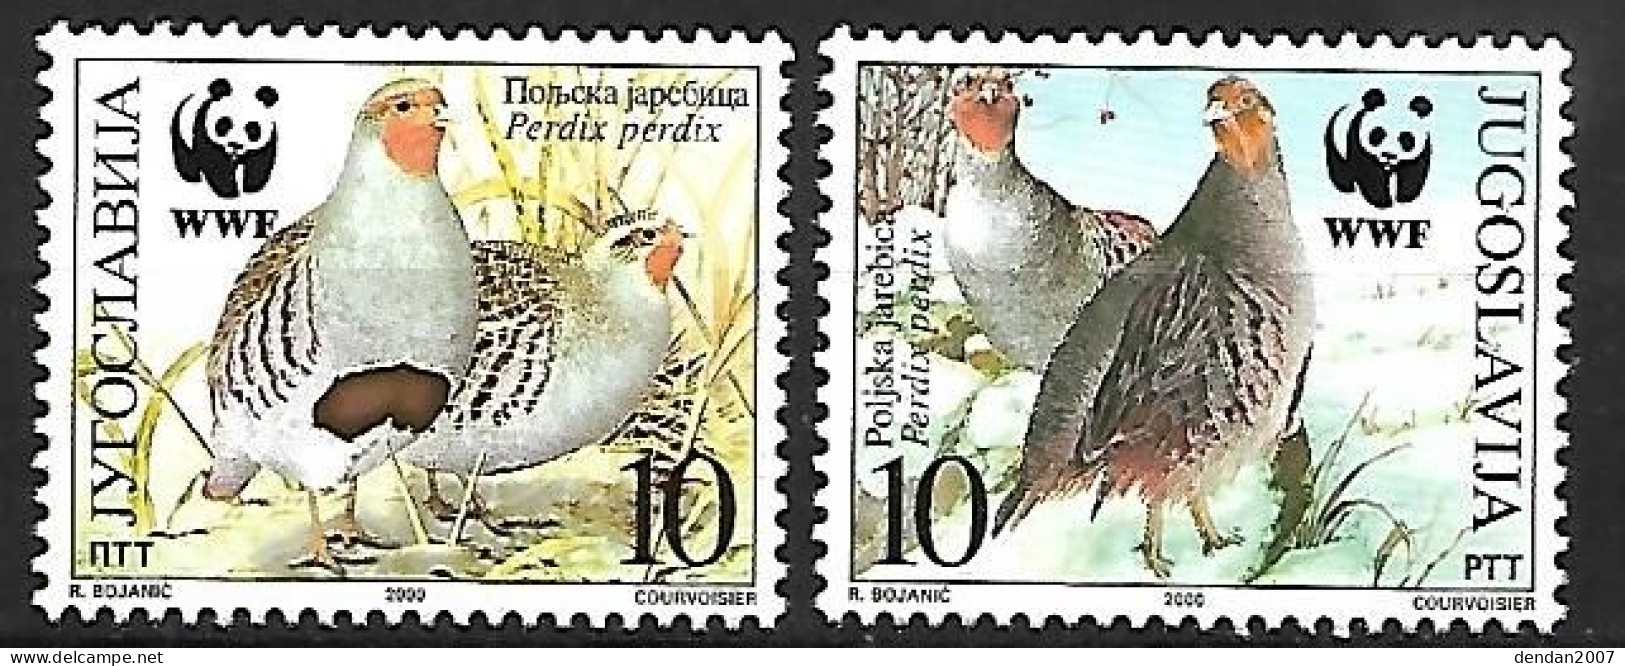 Yugoslavia - MNH ** 2000 :    Rock Partridge   -  Alectoris Graeca - Hoendervogels & Fazanten